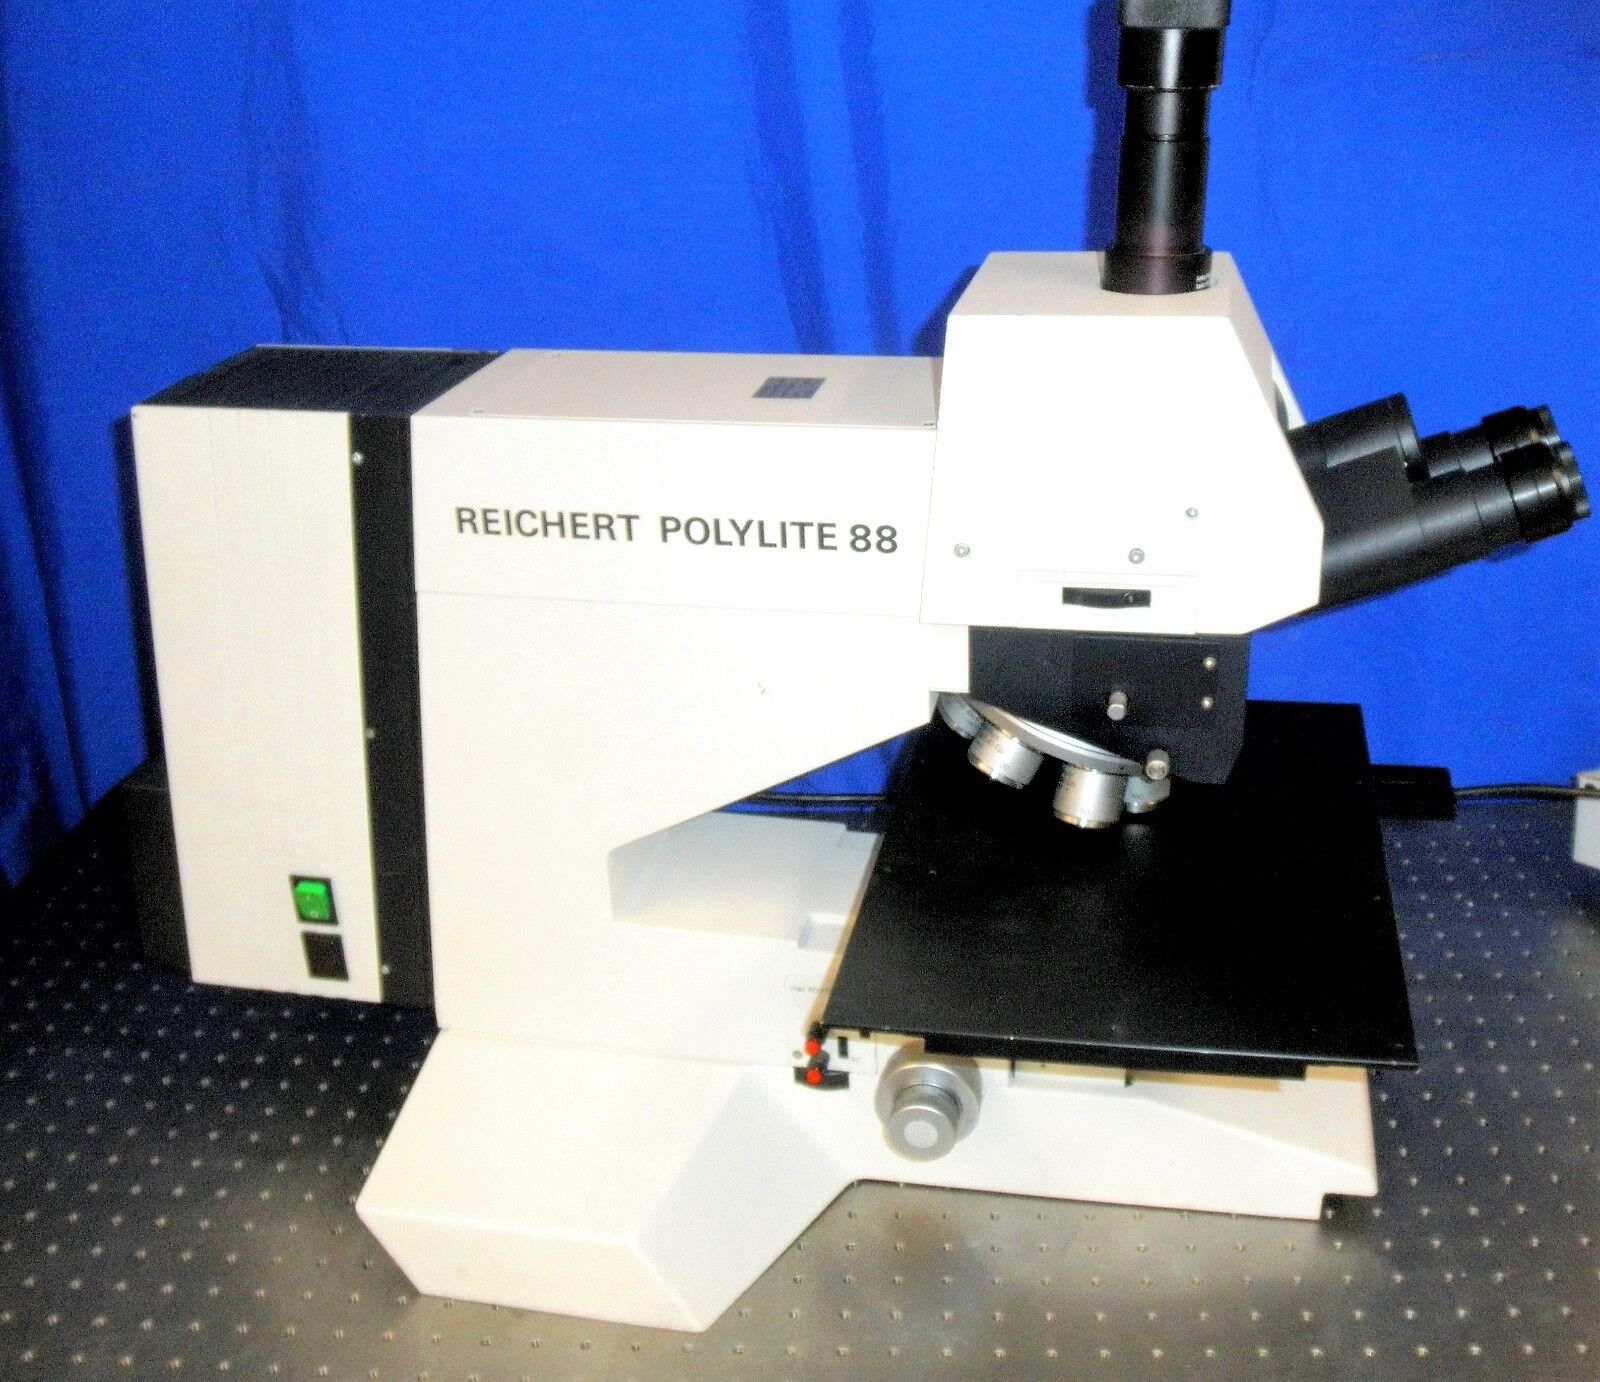 Leica Reichert Polylite 88 DIC  Metallurgical Semiconductor BF/DF microscope